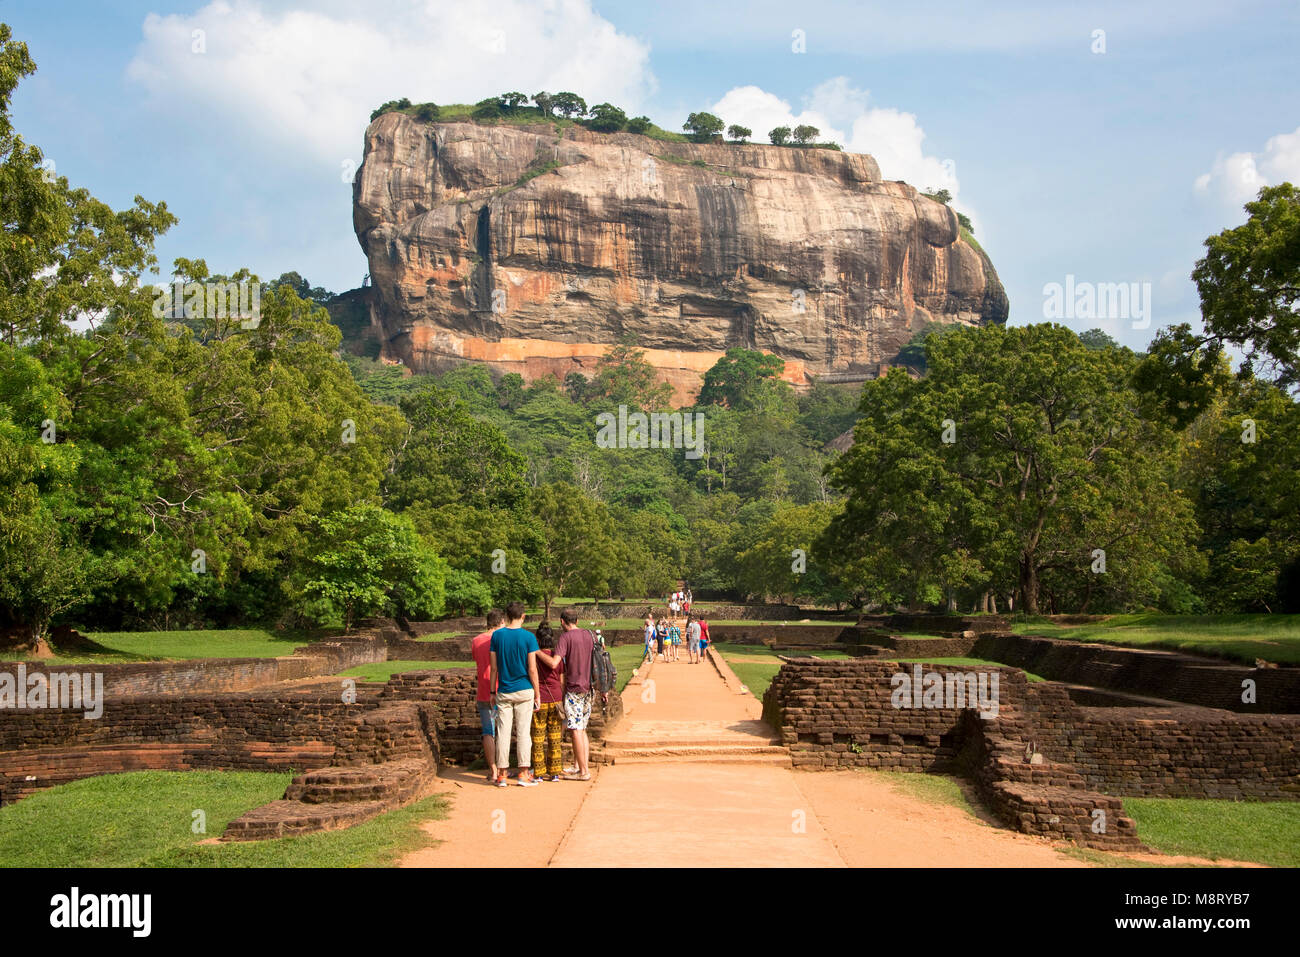 Sigiriya Or Sinhagiri Lion Rock Is An Ancient Rock Fortress Located Stock Photo Alamy